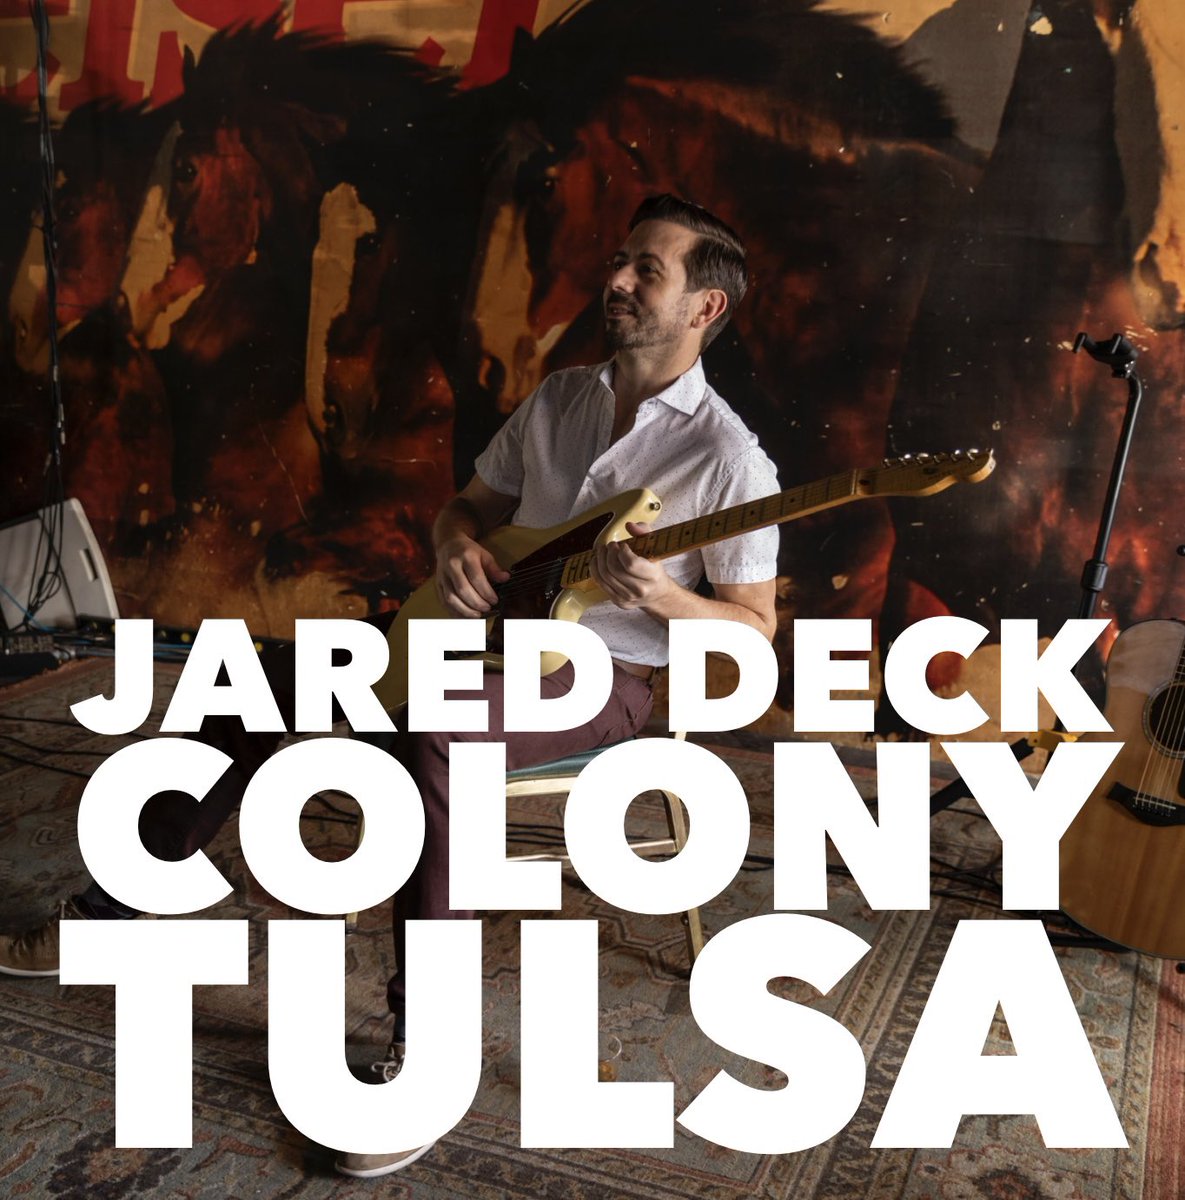 Friday night in #Tulsa! 9pm downbeat at @TheColonyTulsa . Hang and hear the new tunes from #HeadAboveWater. $10. #singersongwriter #tulsamusic #oklahomamusic #reddirtmusic #americanamusic #tulsamusicscene #tulsaok